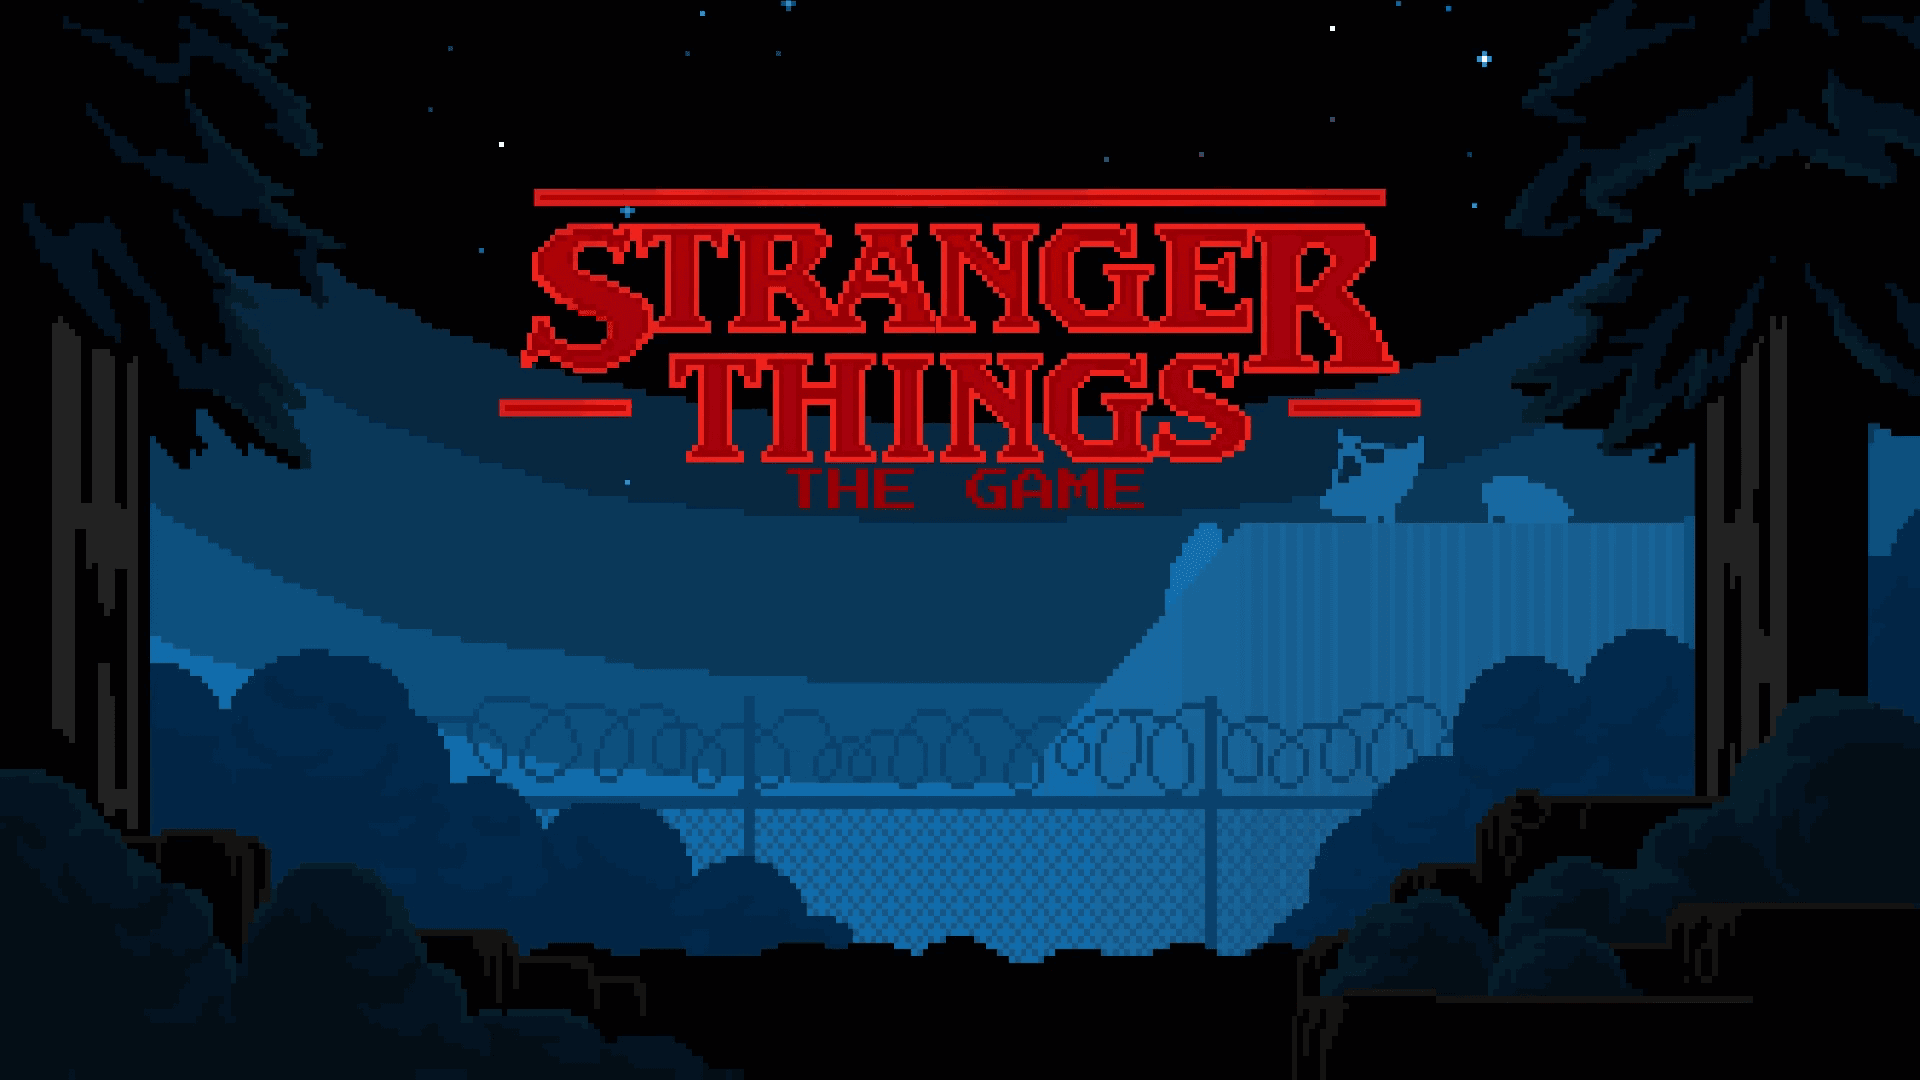 Stranger Things 3 The Game PC Version Full Game Free Download